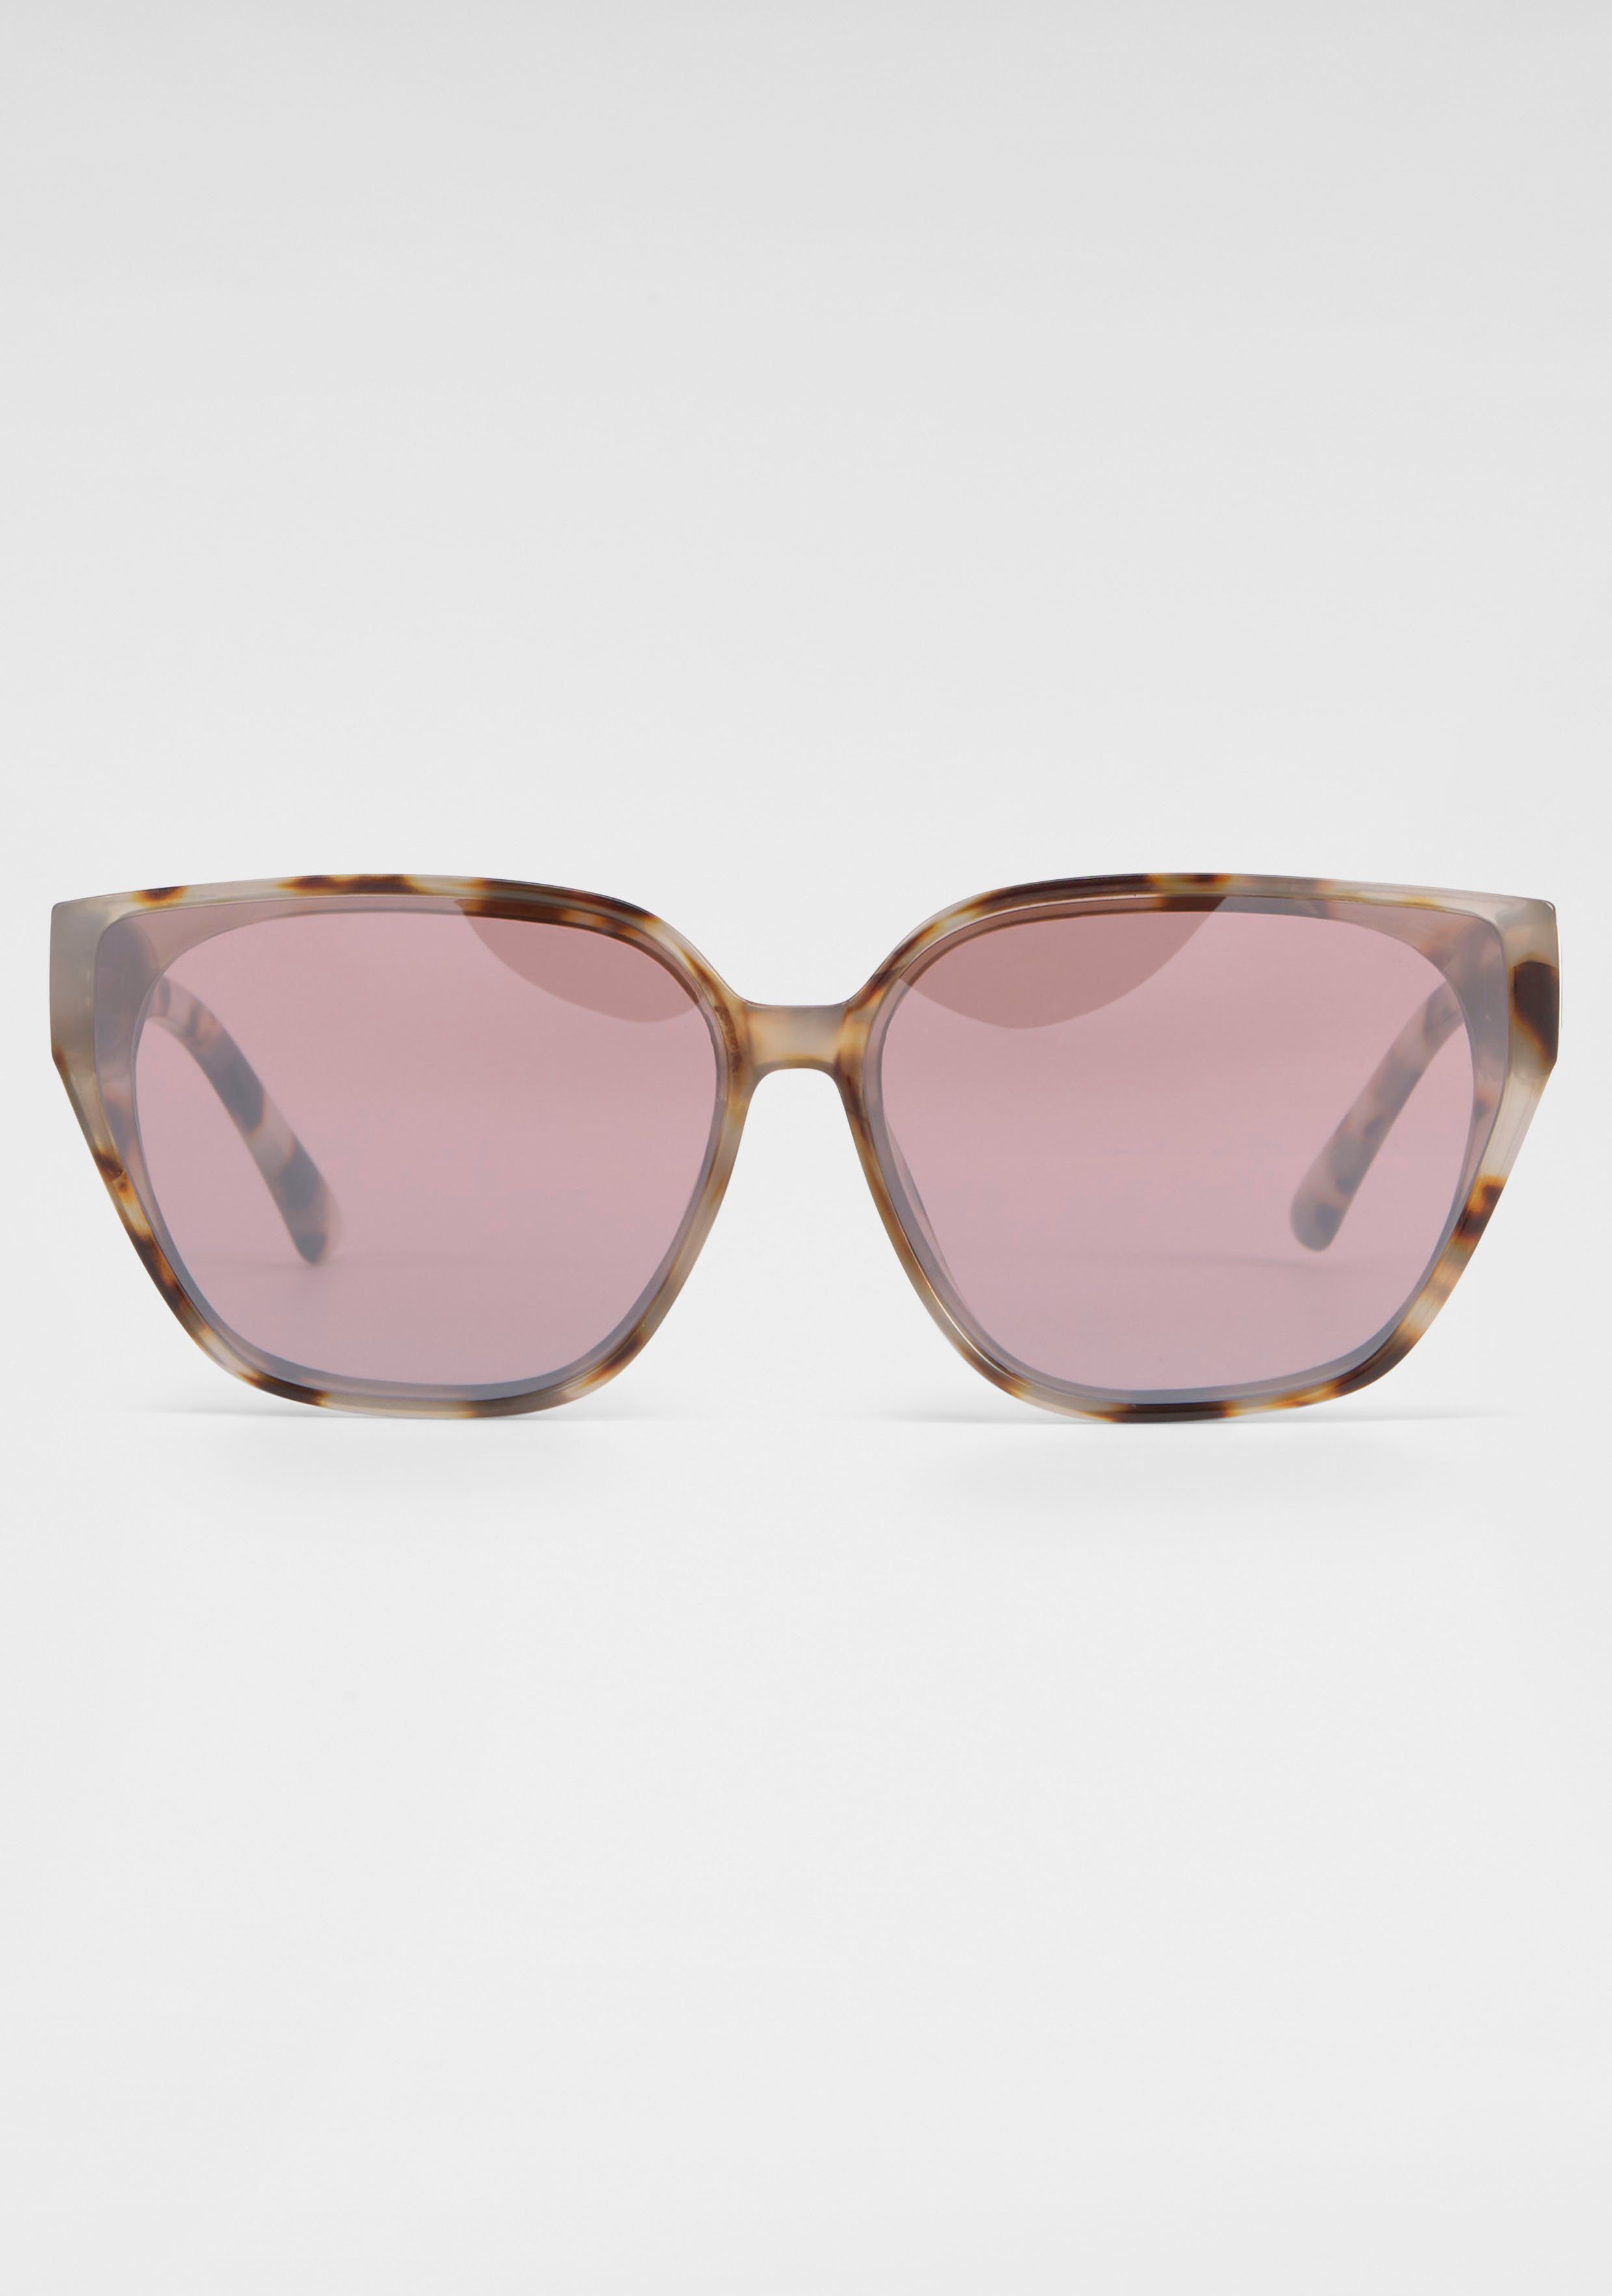 catwalk braun-natur Leo-Optik Sonnenbrille Eyewear